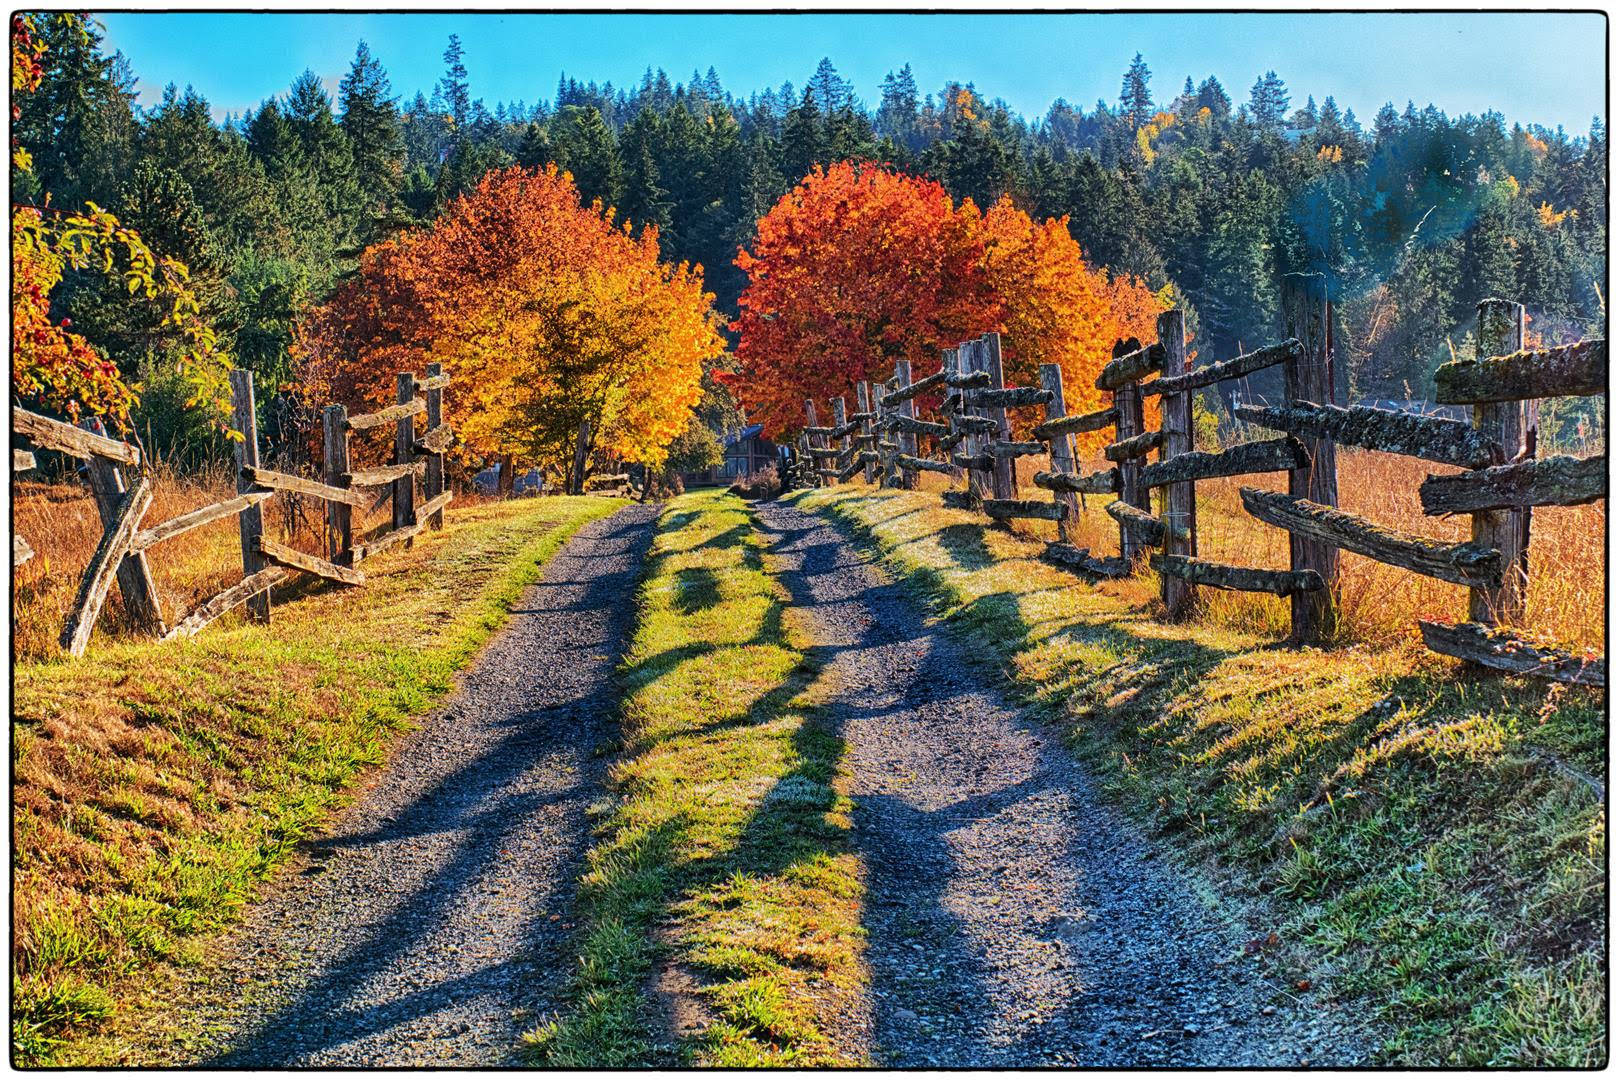 Contributor Bob Lampert spots this idyllic fall scene in Happy Valley last week.